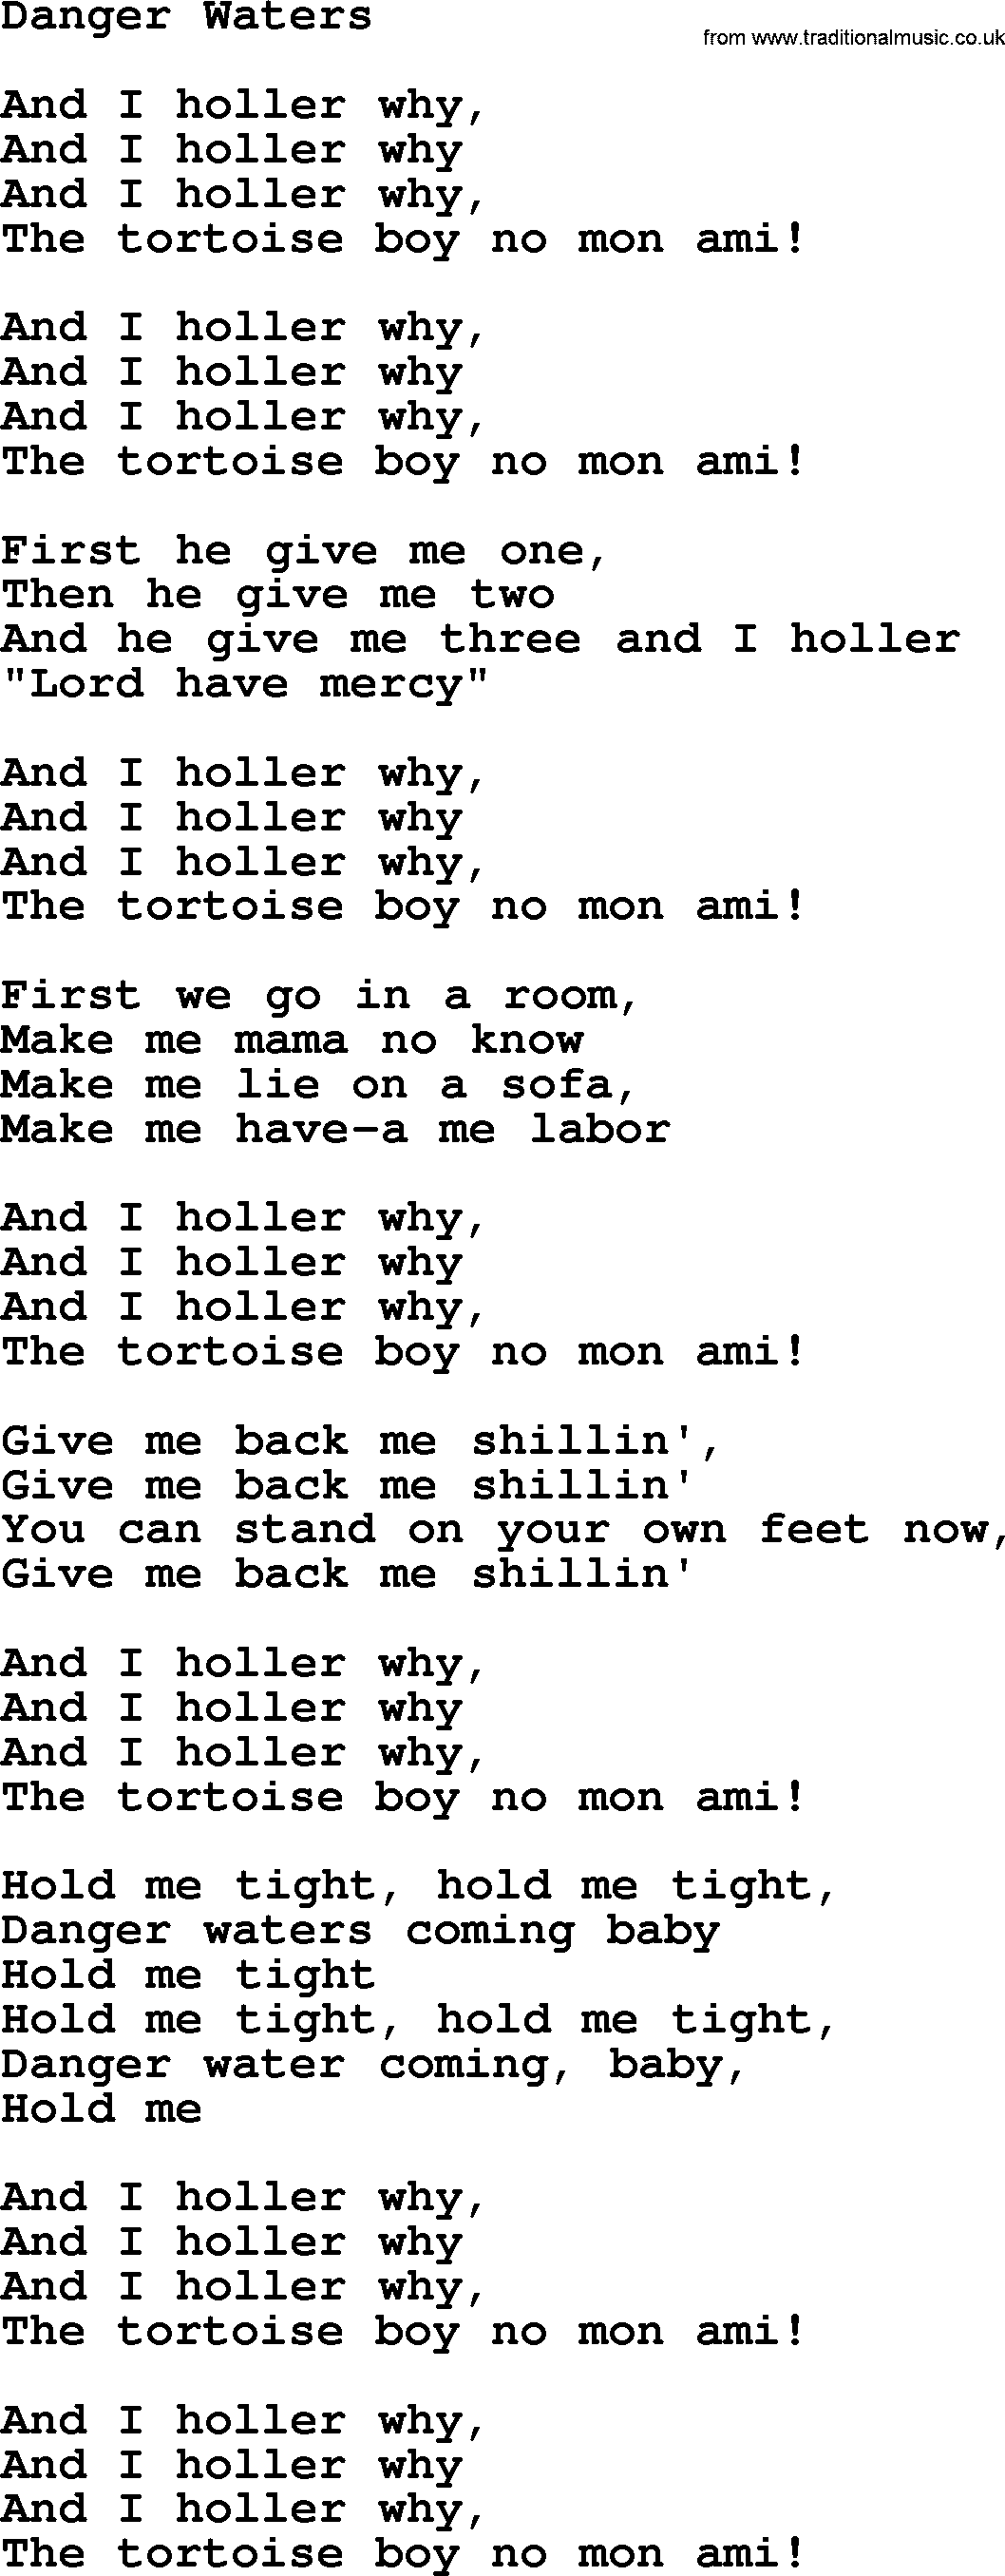 Joan Baez song Danger Waters, lyrics